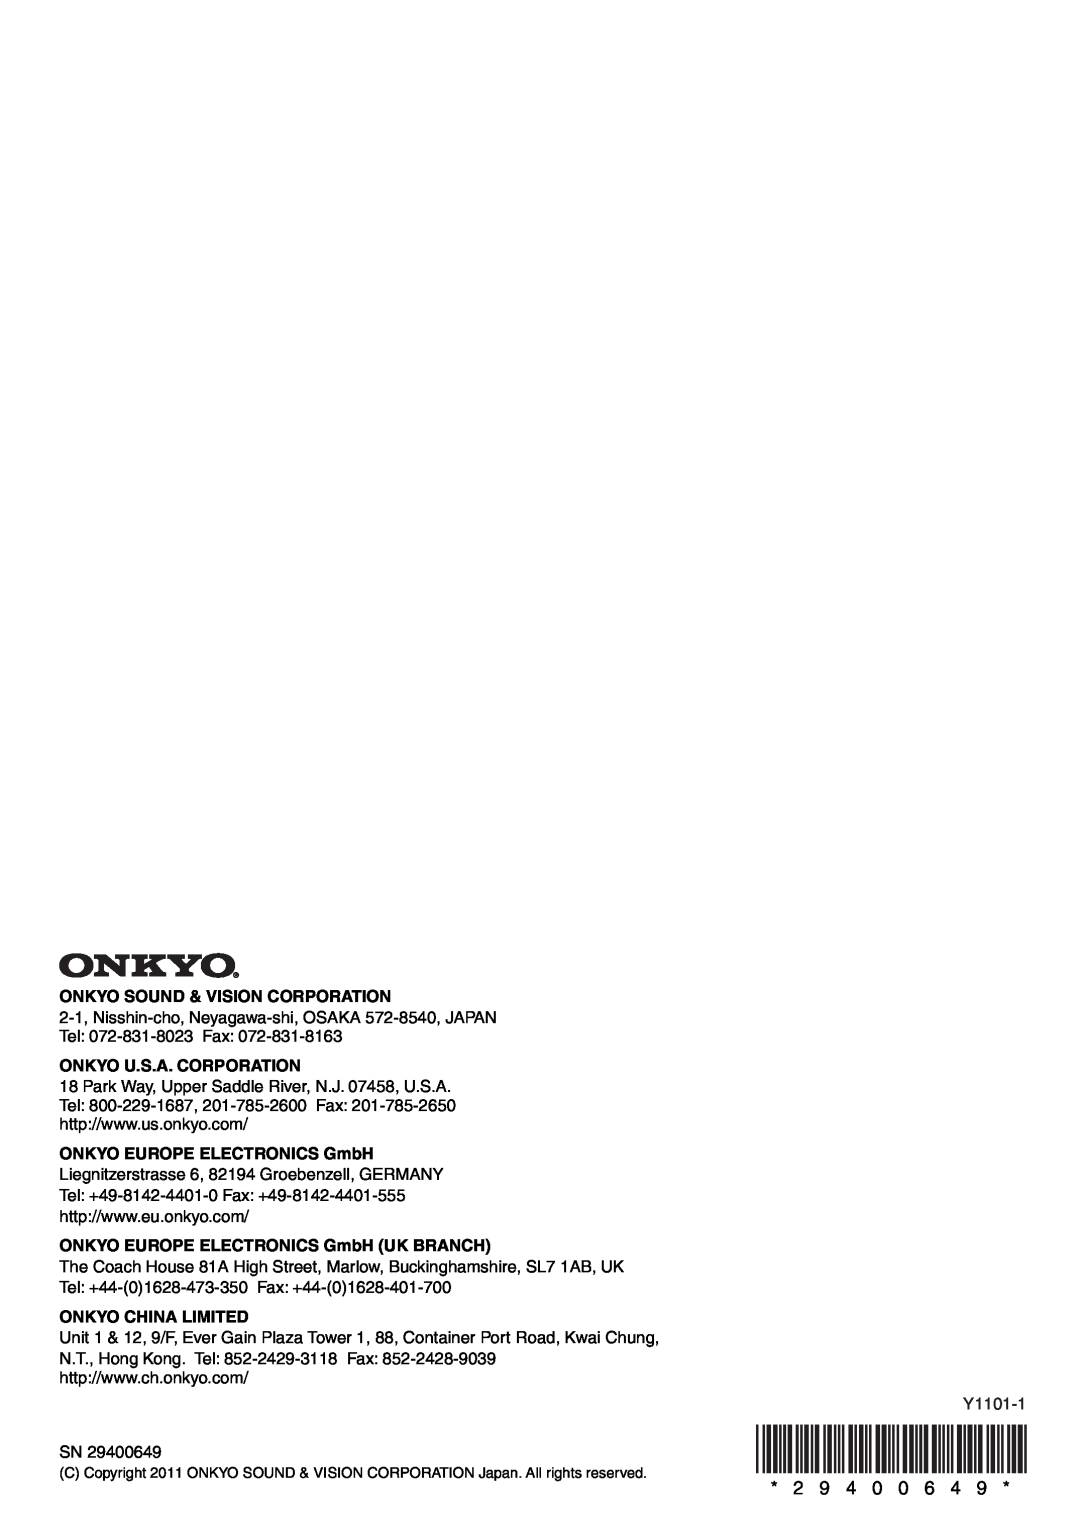 Onkyo HT-RC360 2 9 4 0 0 6 4, Onkyo Sound & Vision Corporation, Onkyo U.S.A. Corporation, ONKYO EUROPE ELECTRONICS GmbH 